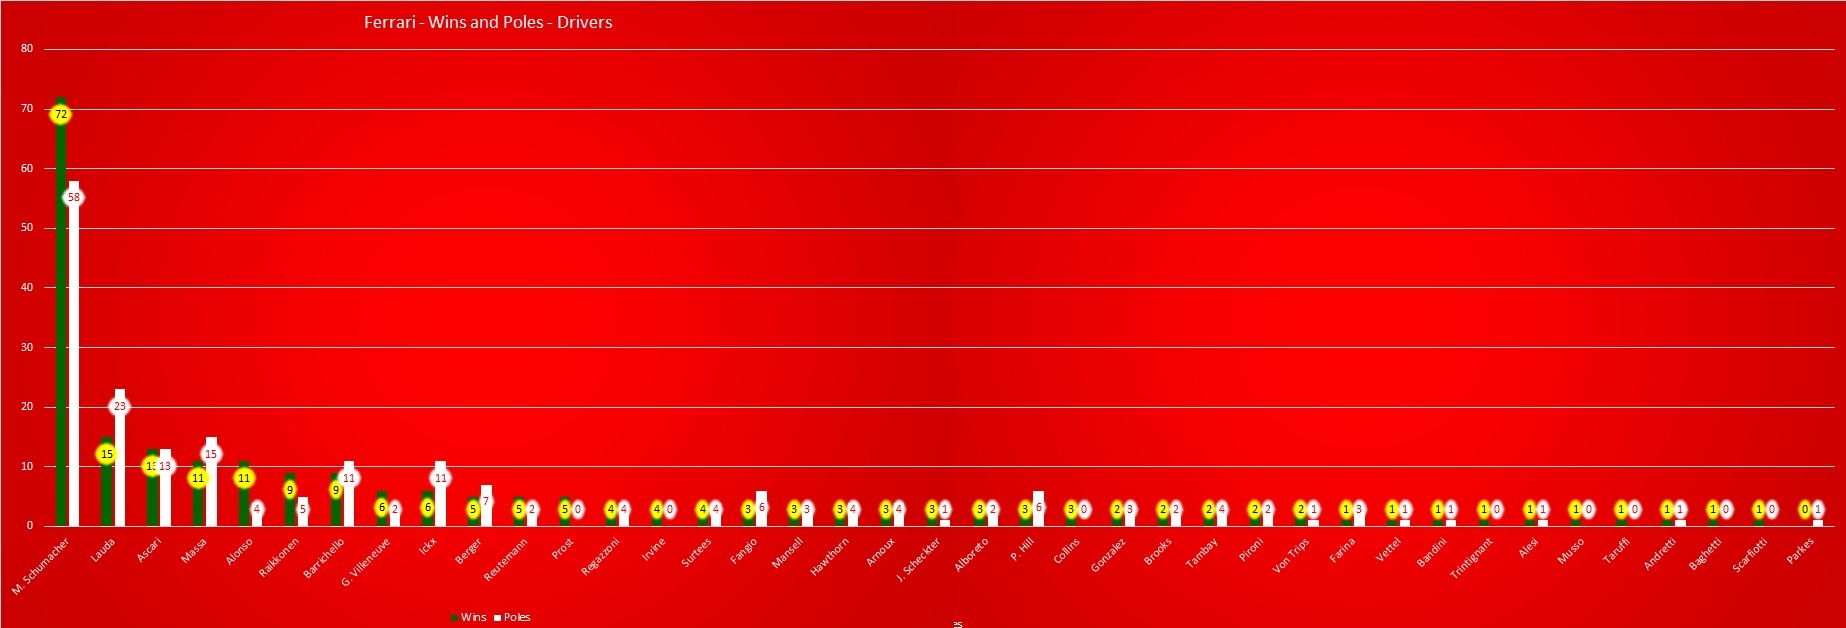 2014 Ferrari Engine Stats